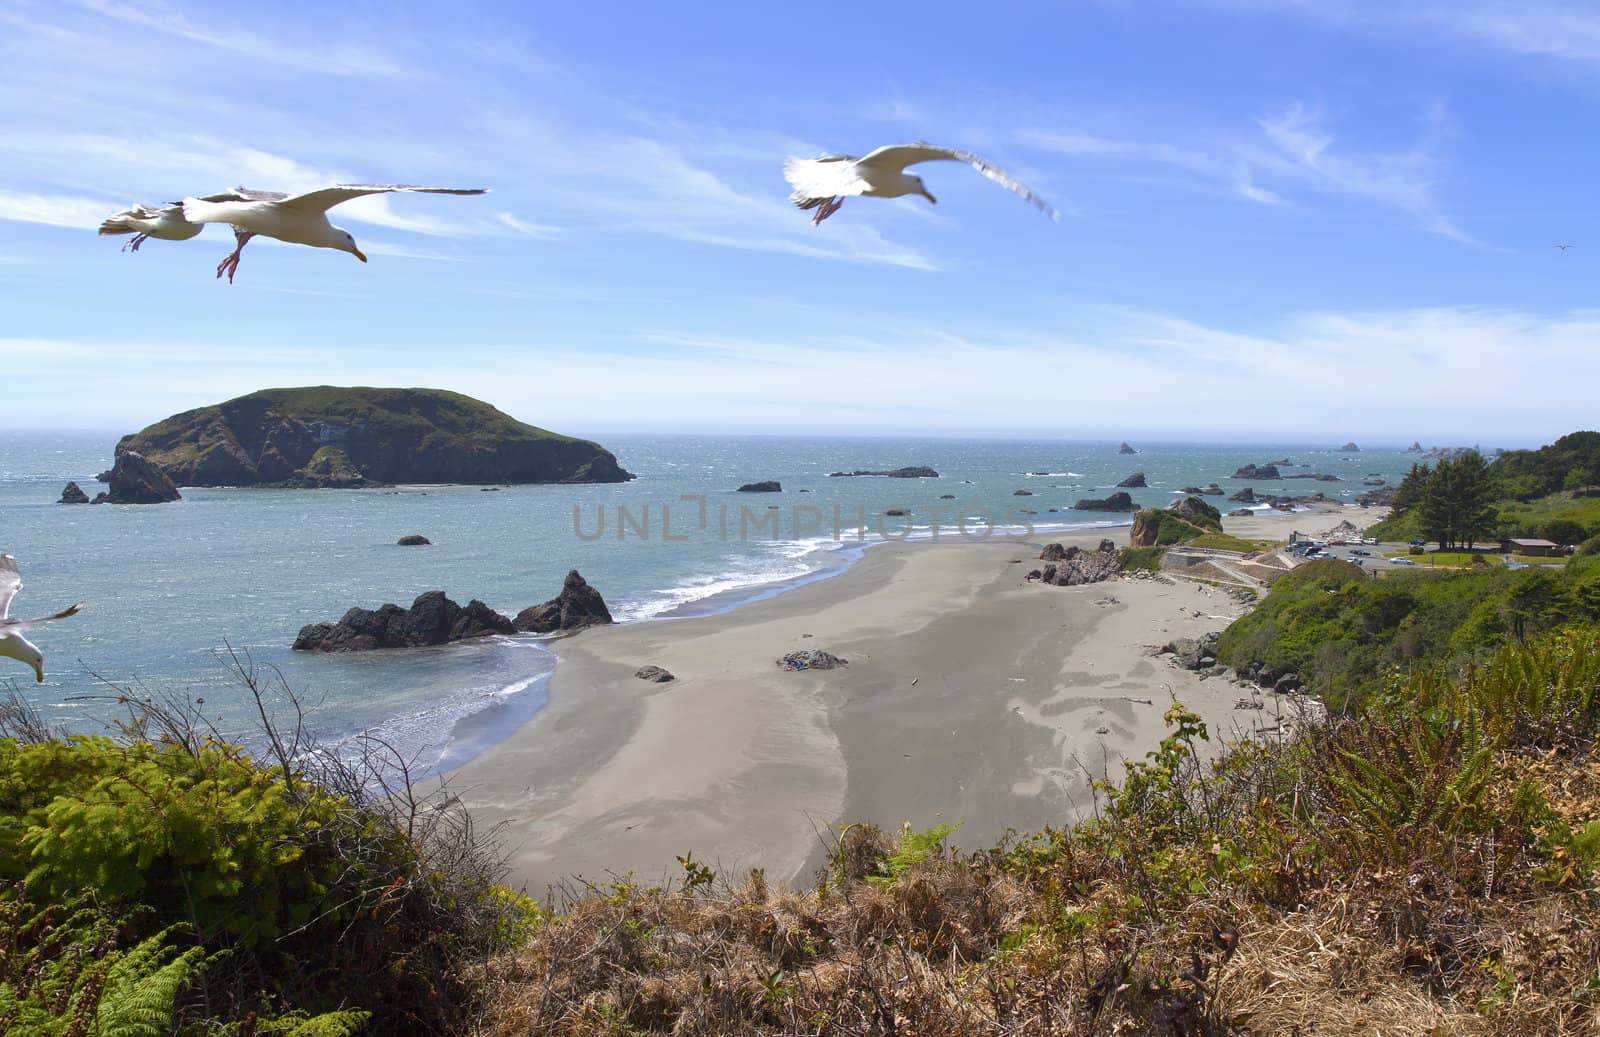 Oregon coastline rocky beaches and seagulls near Yachats OR.